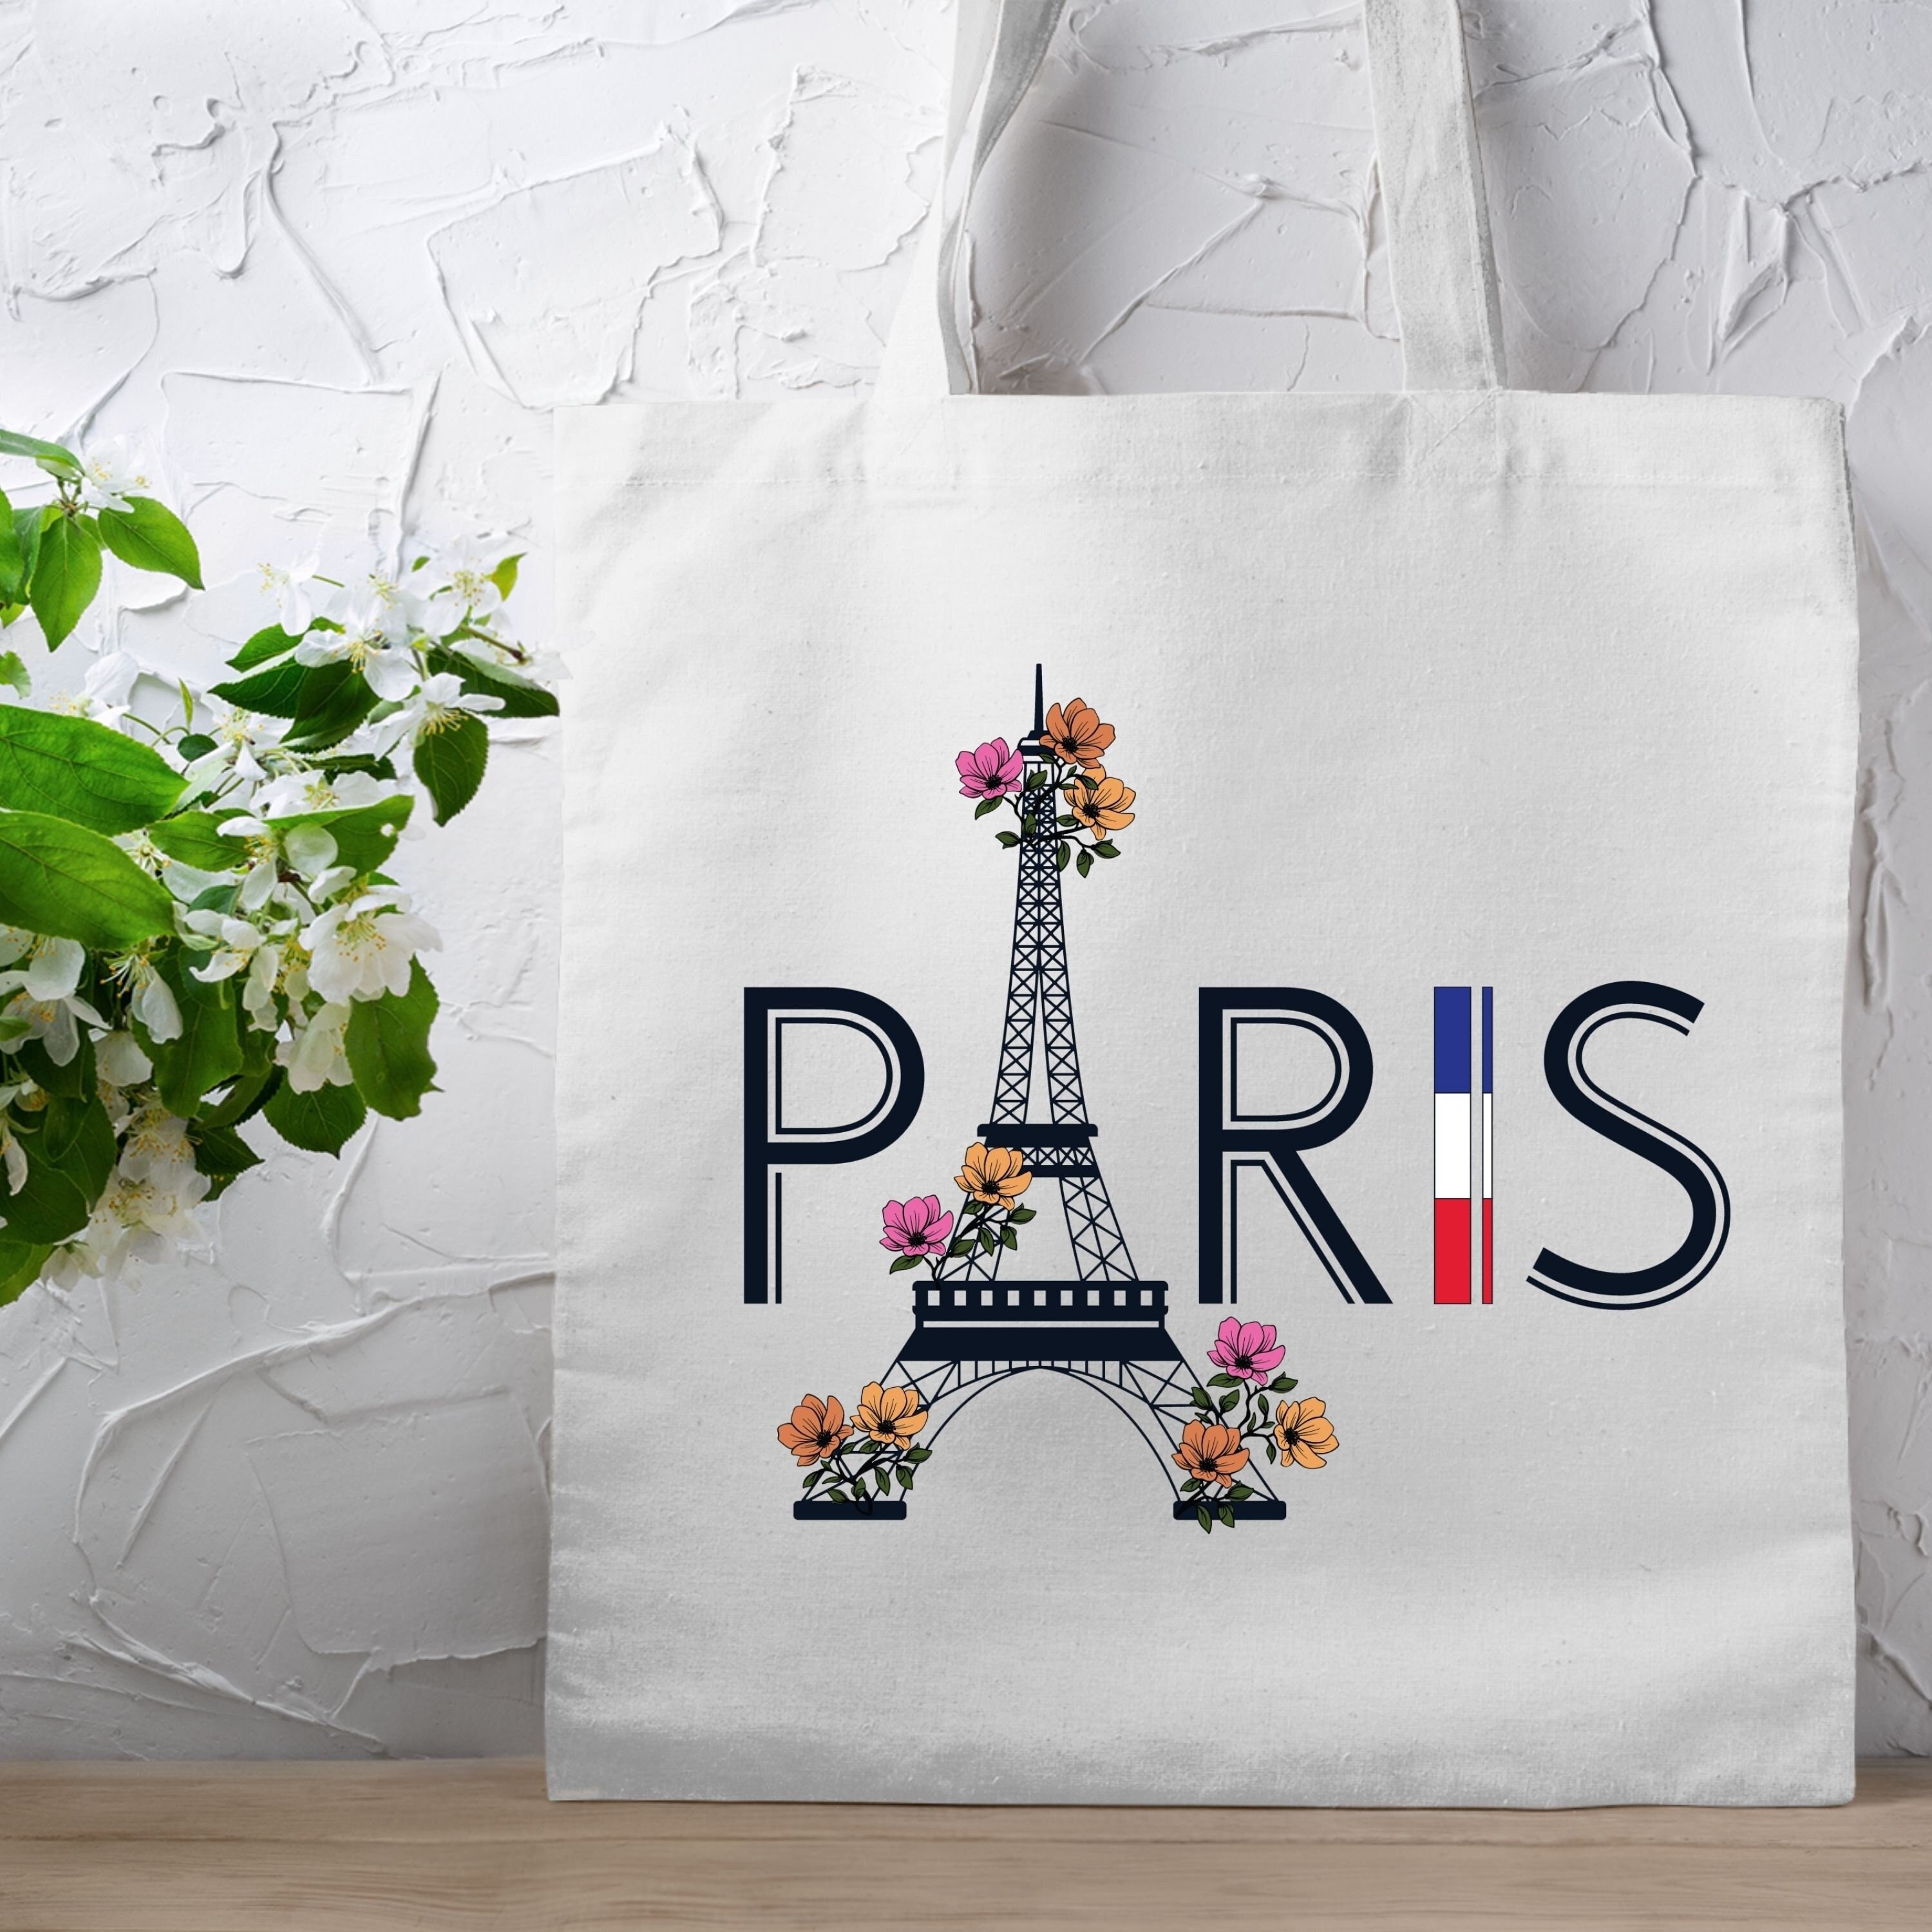  ZJXHPO Paris Tote Bag France Travel Gift Paris